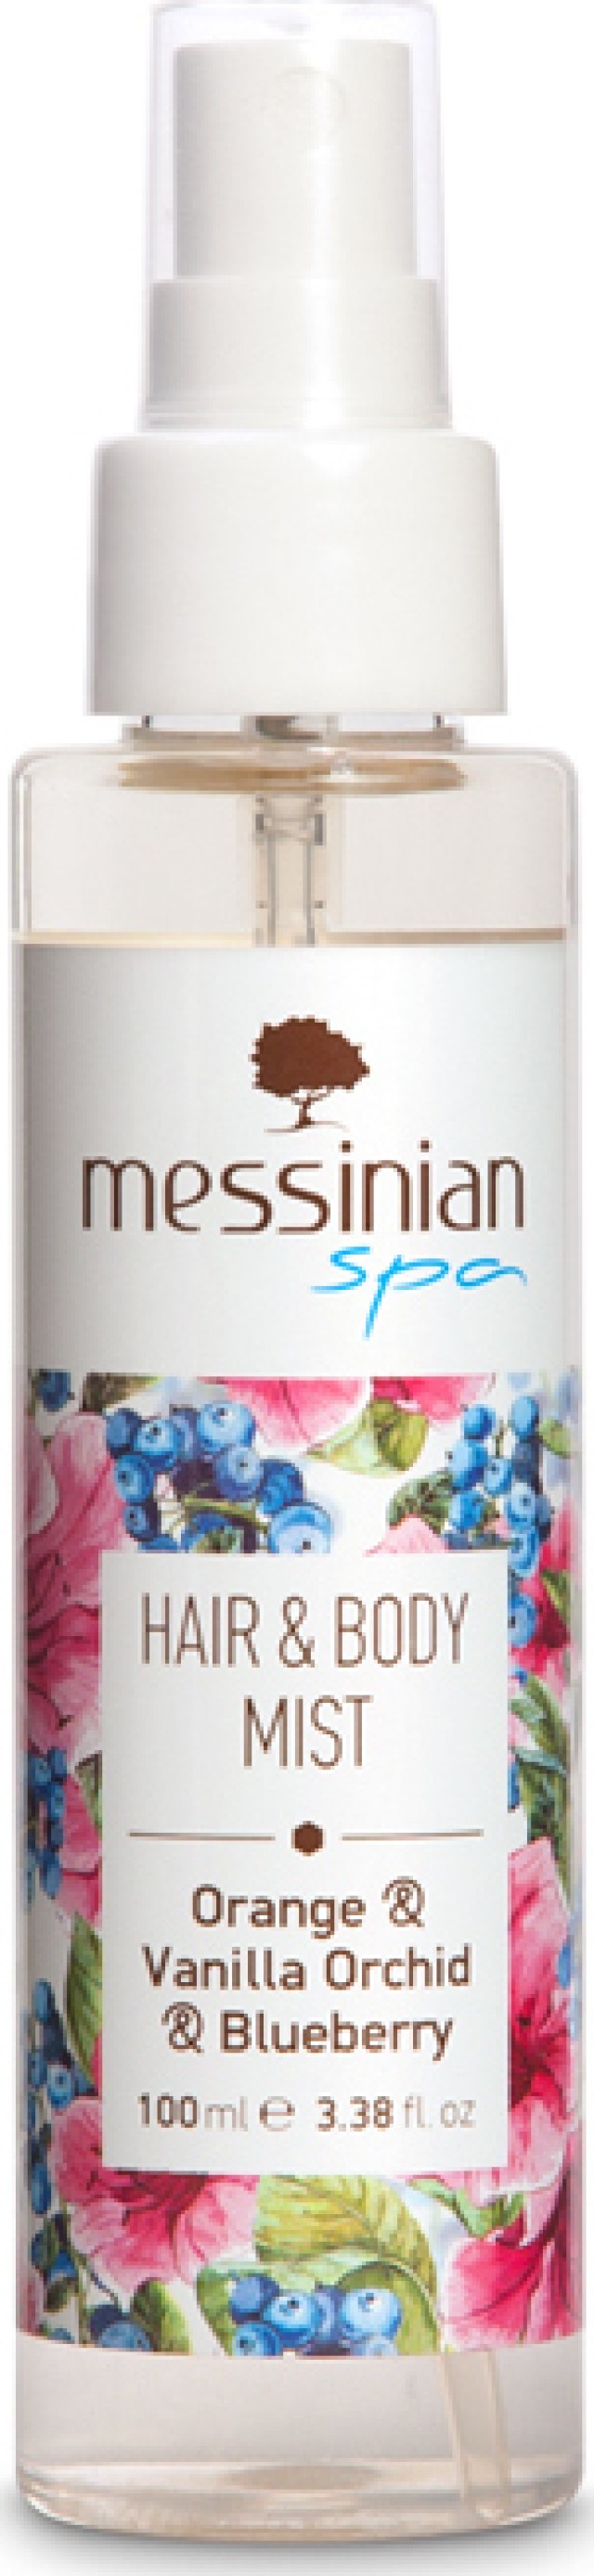 Messinian Spa Hair & Body Mist Αρωματικό Σπρέι για Μαλλιά & Σώμα με Πορτοκάλι, Ορχιδέα Βανίλια & Μύρτιλο 100ml